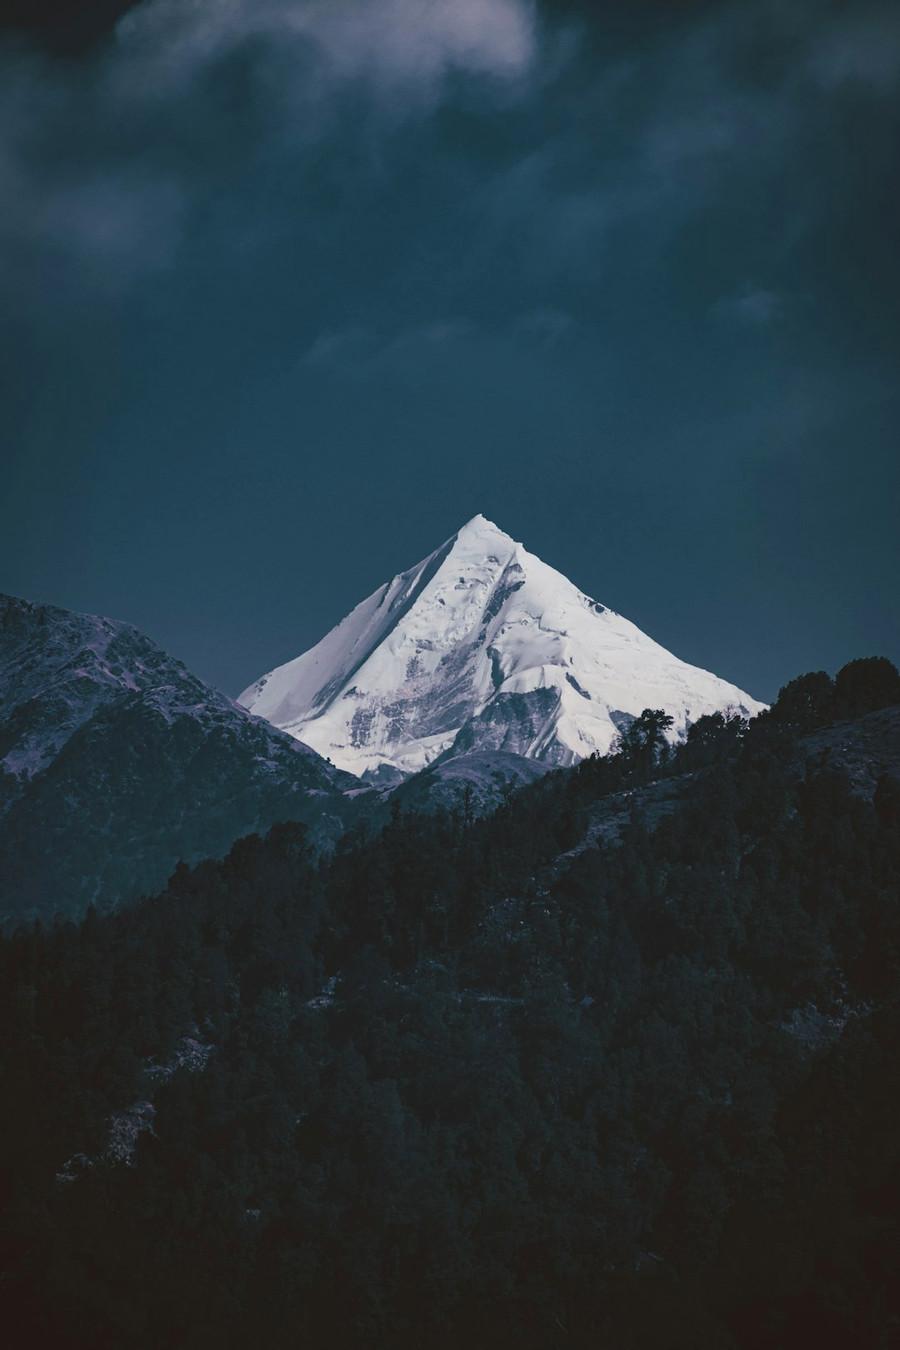 5 – Reach the peak of the mountain